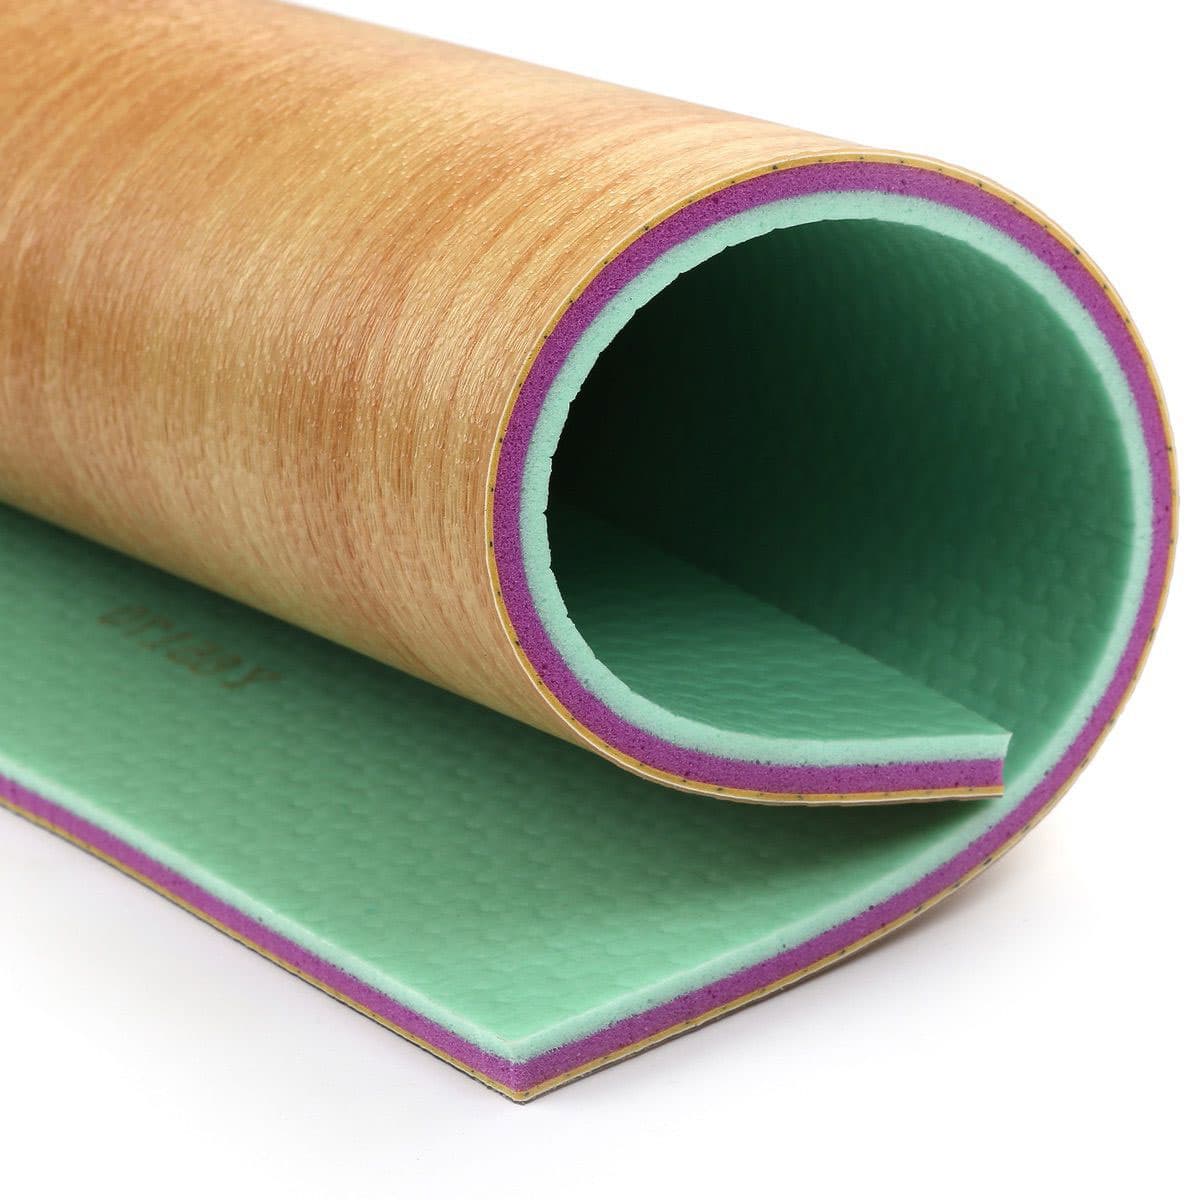 Axis PVC roll flooring